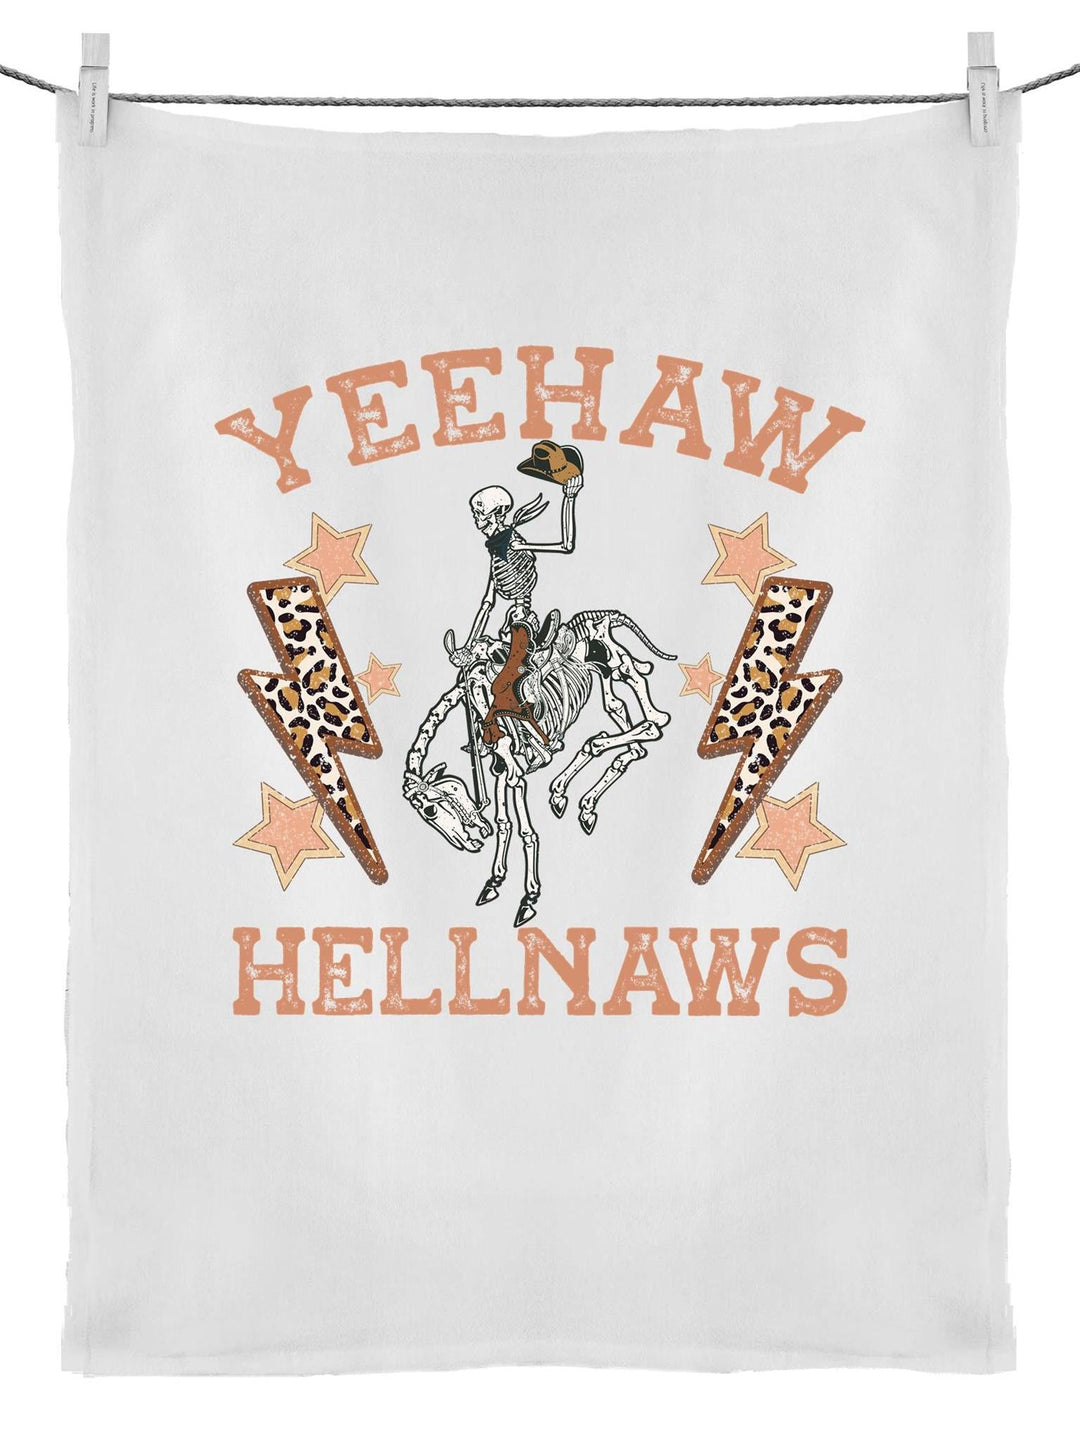 Yeehaw Hellnaws Cotton Tea Towel